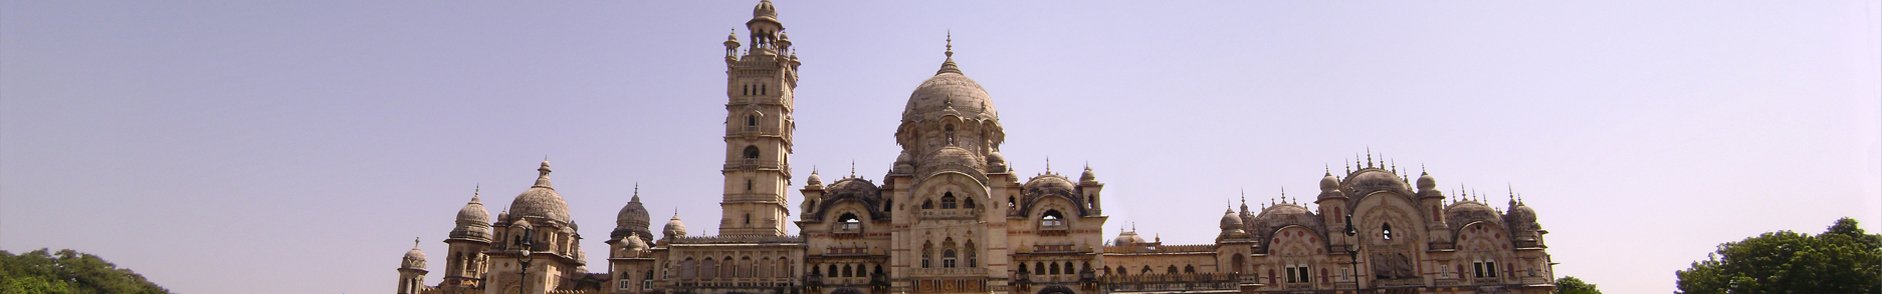 Vadodara Travel Guide, Gujarat